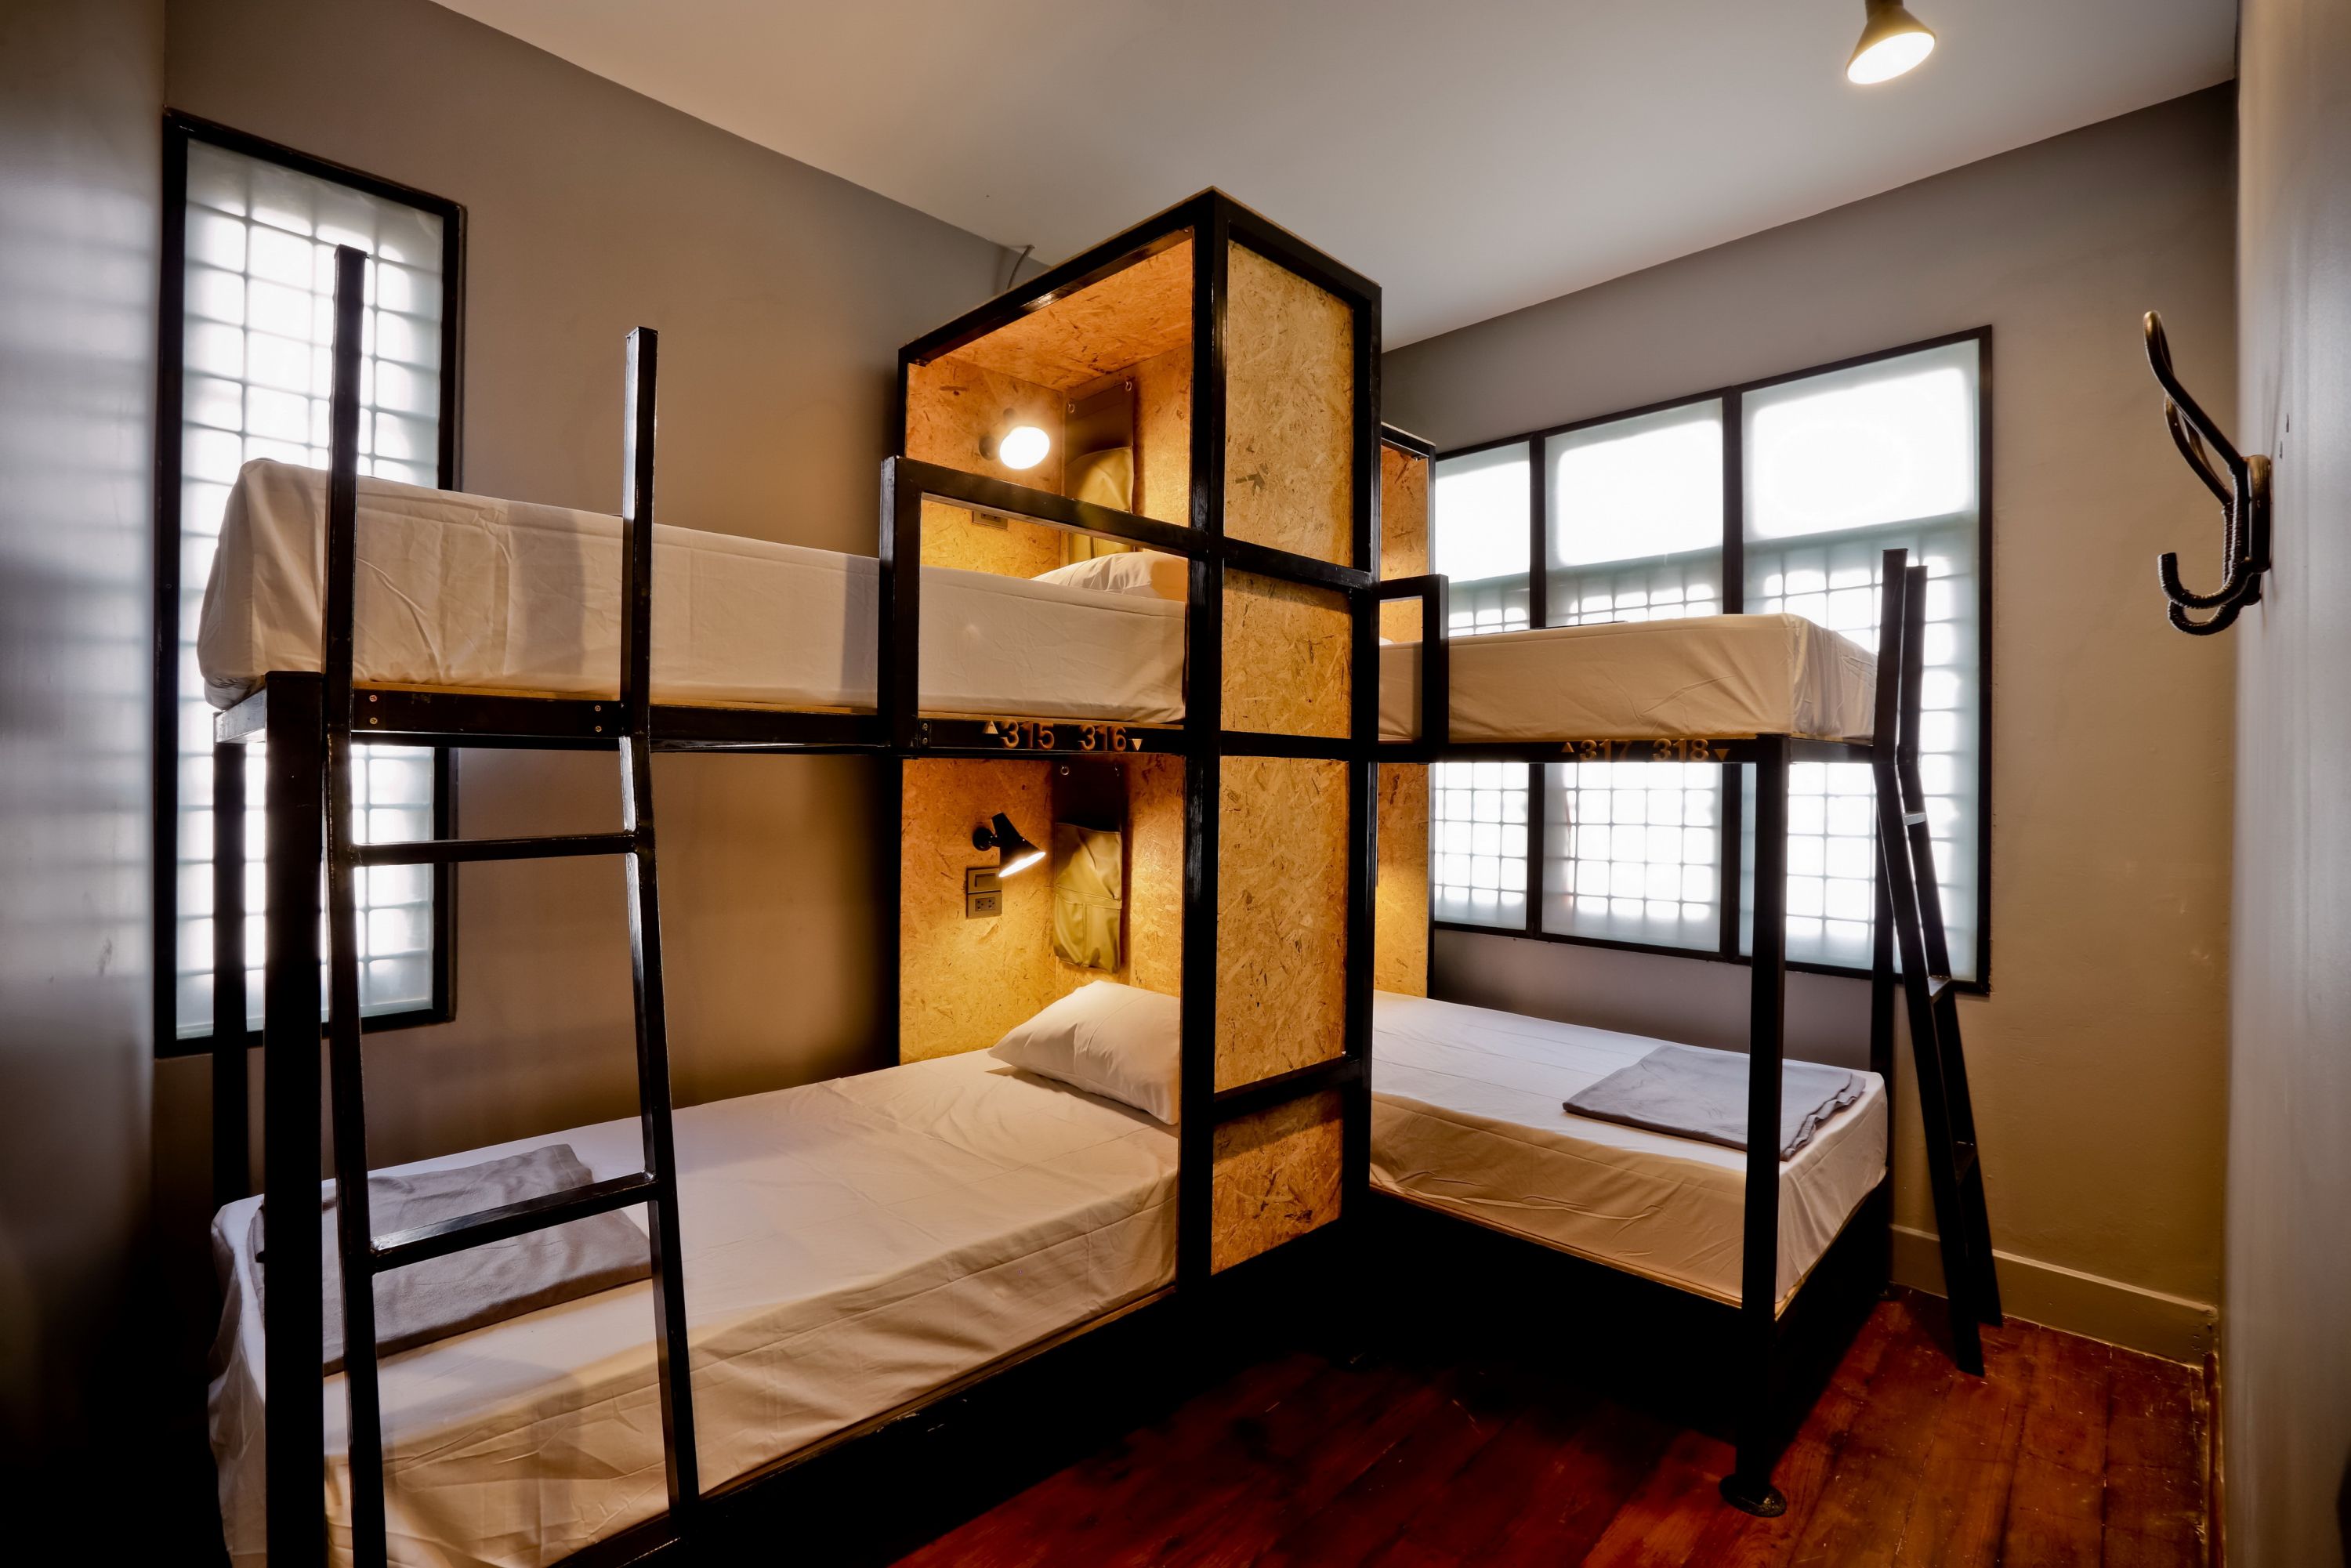 4 bunk beds in a room